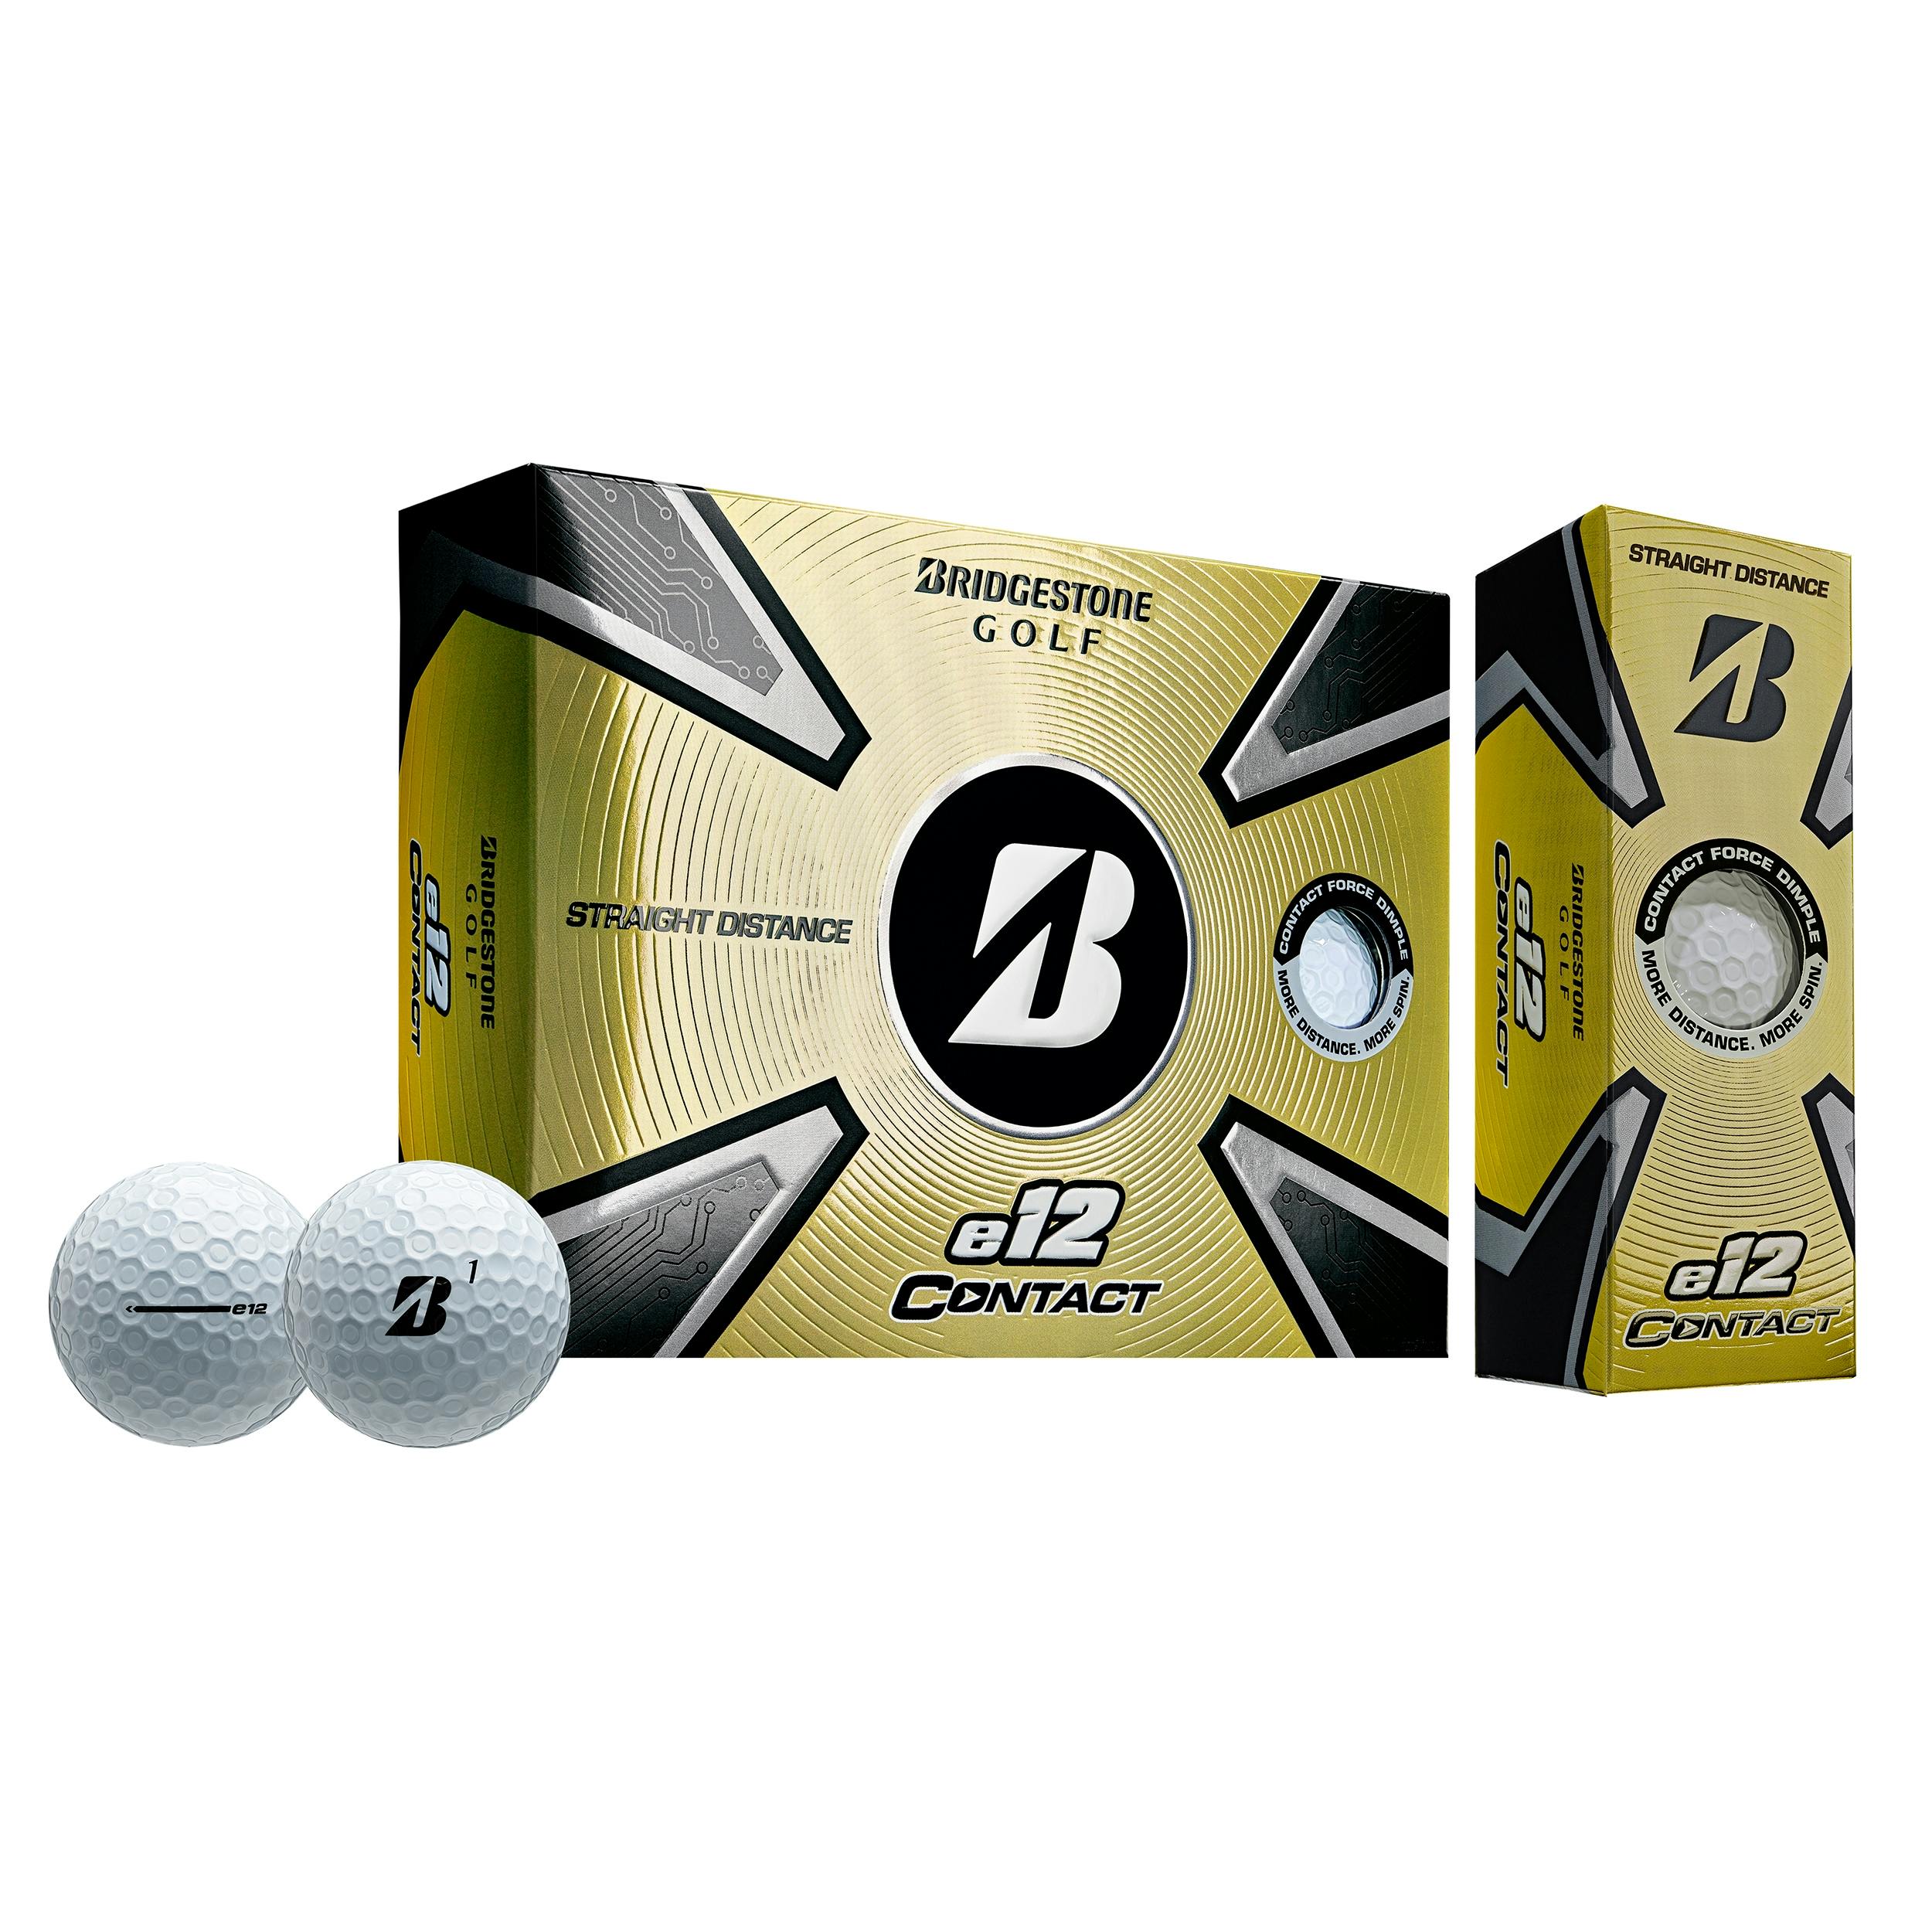 Bridgestone Golf golf balls e12 contact